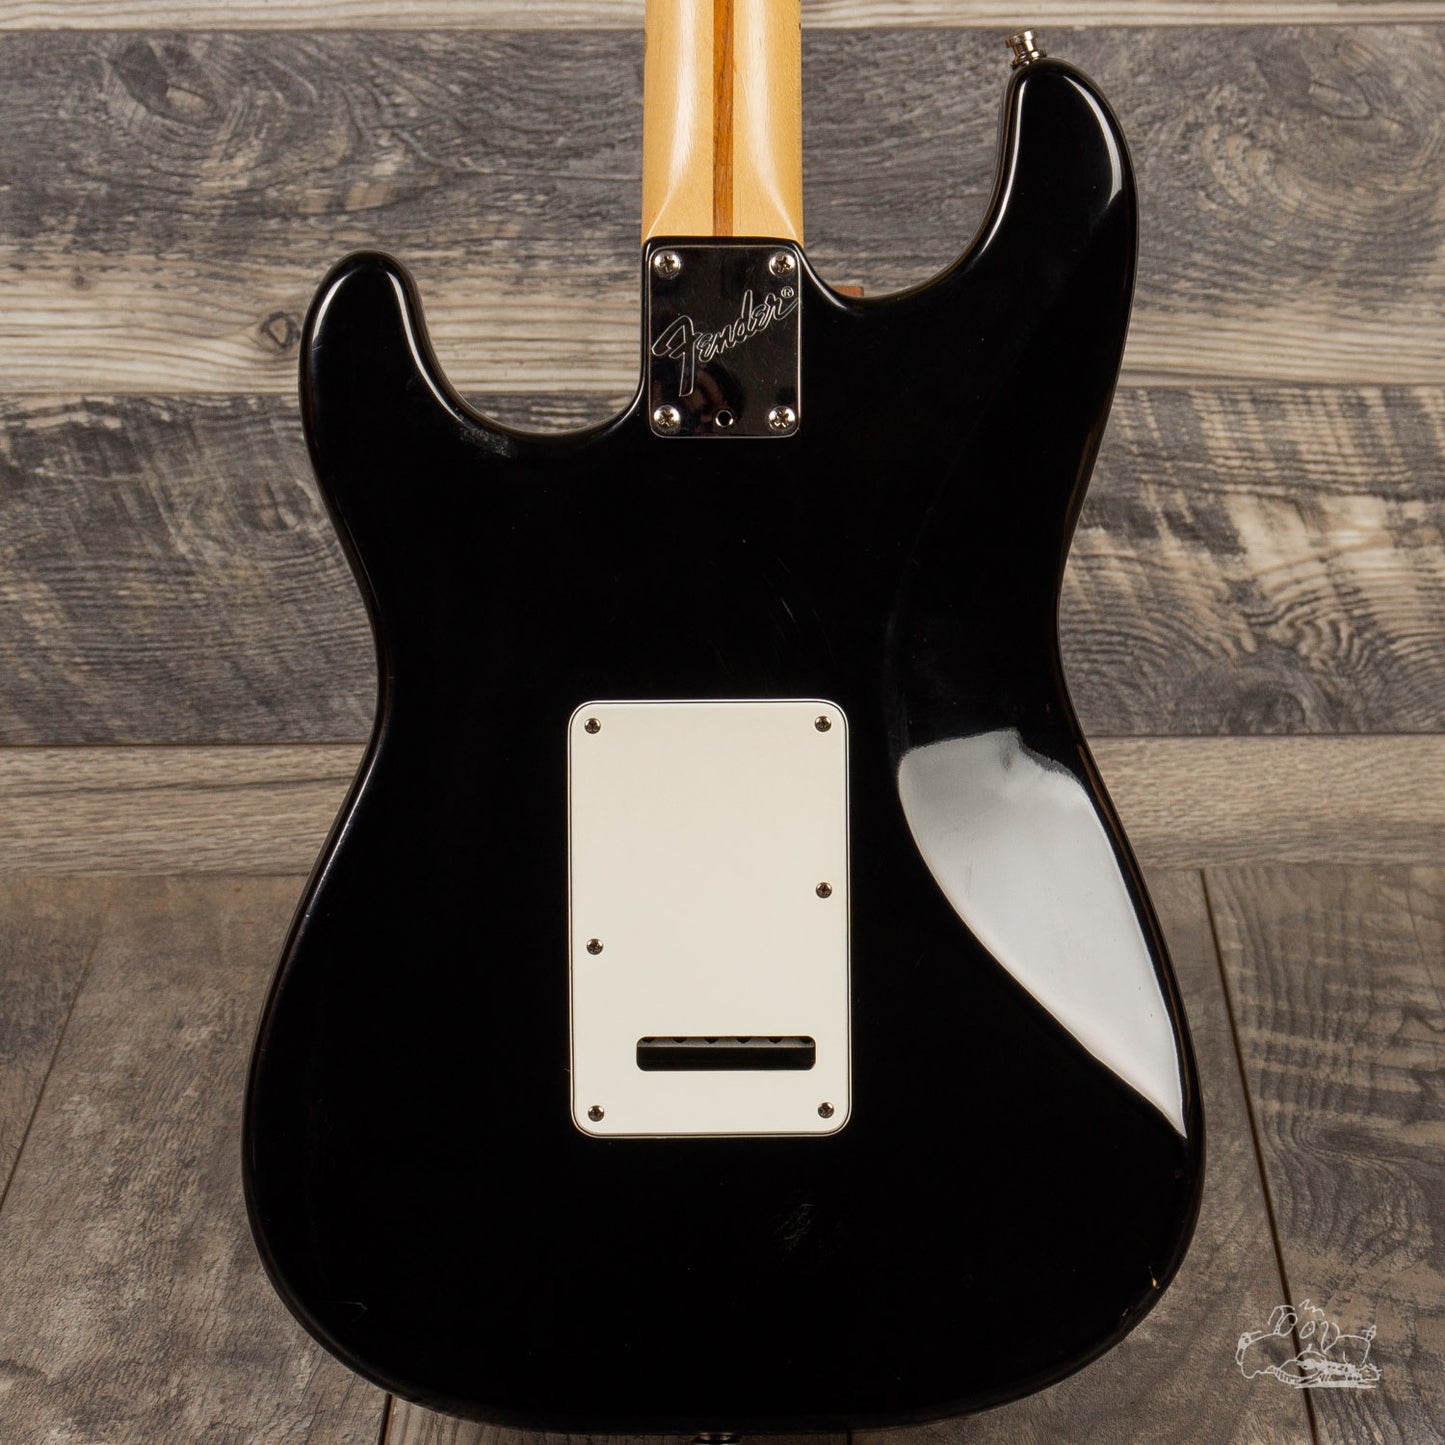 1993 American Standard Fender Stratocaster